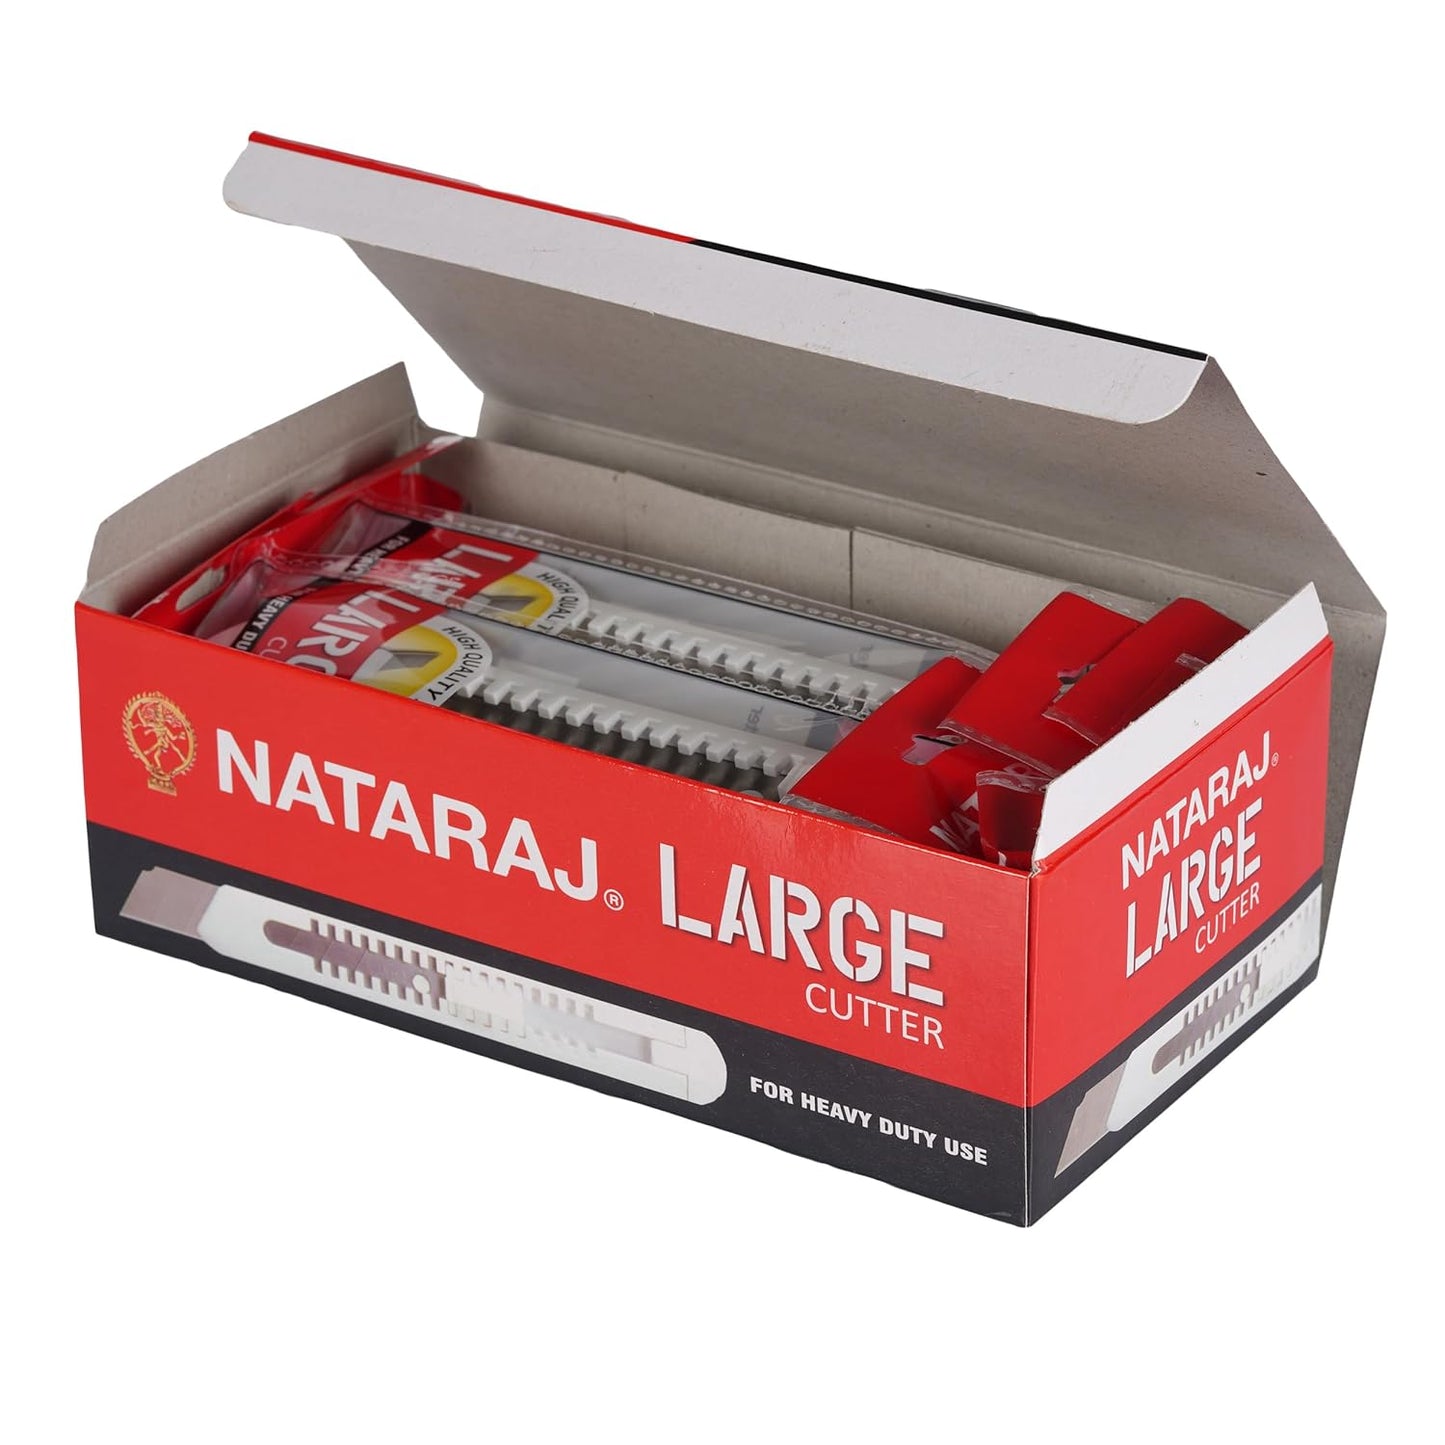 Nataraj Large Cutter - Pack of 10